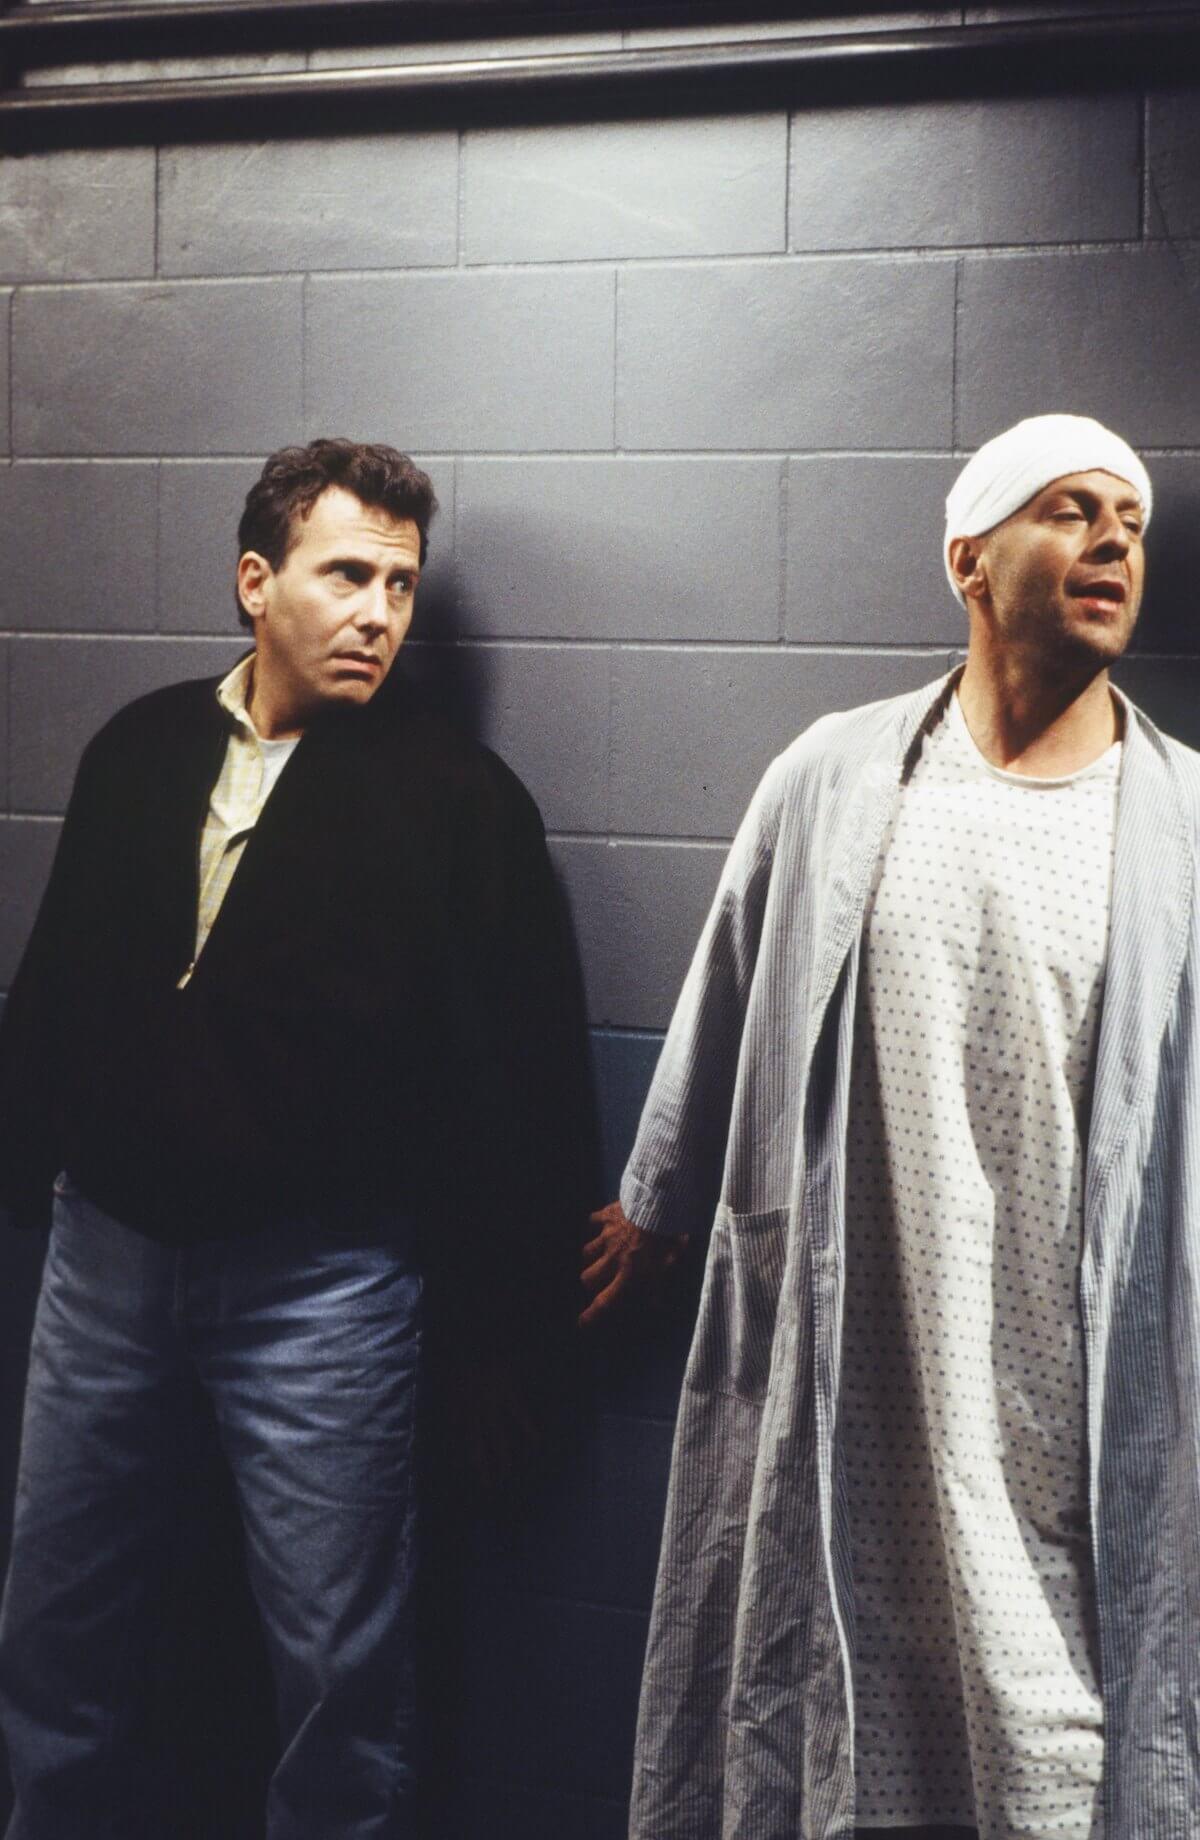 Bruce Willis meets Paul Buchman (Paul Reiser) in the hospital halls on